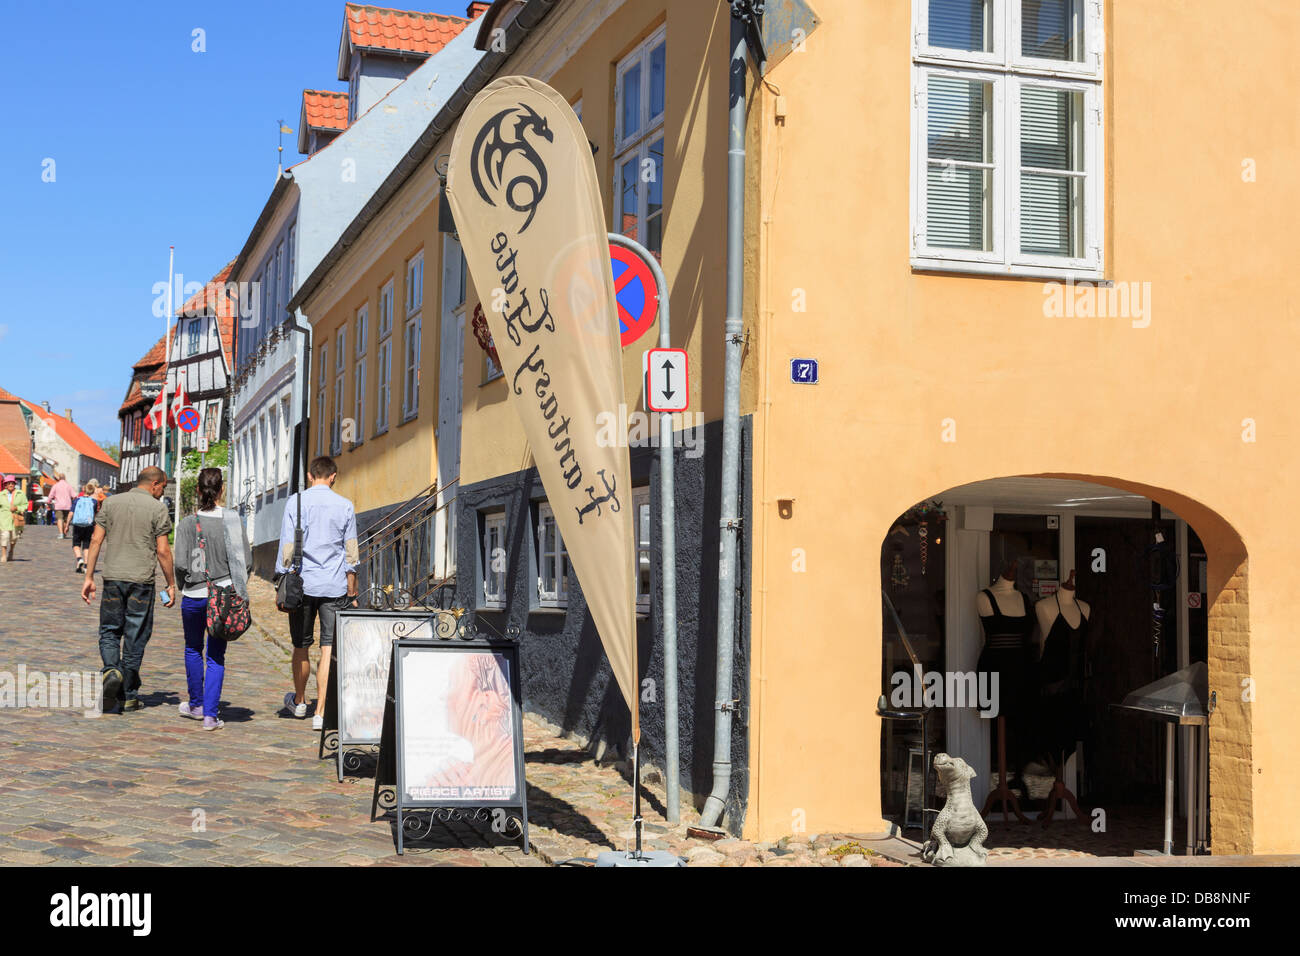 Clothing shop in popular tourist town. Juulsbakke, Ebeltoft, Jutland ...